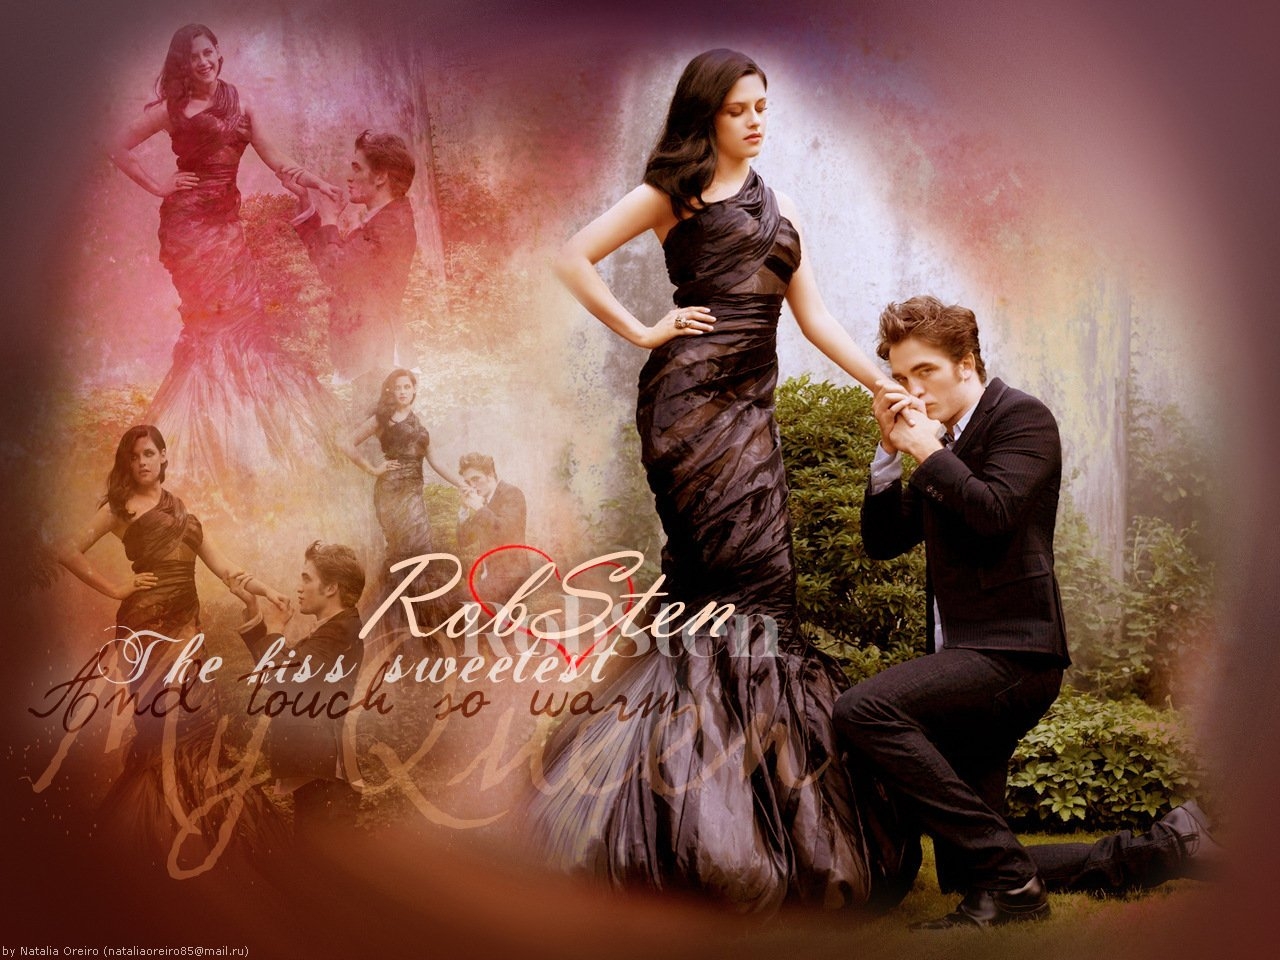 Rob-and-Kristen-twilight-series-8969790-1280-960 -  